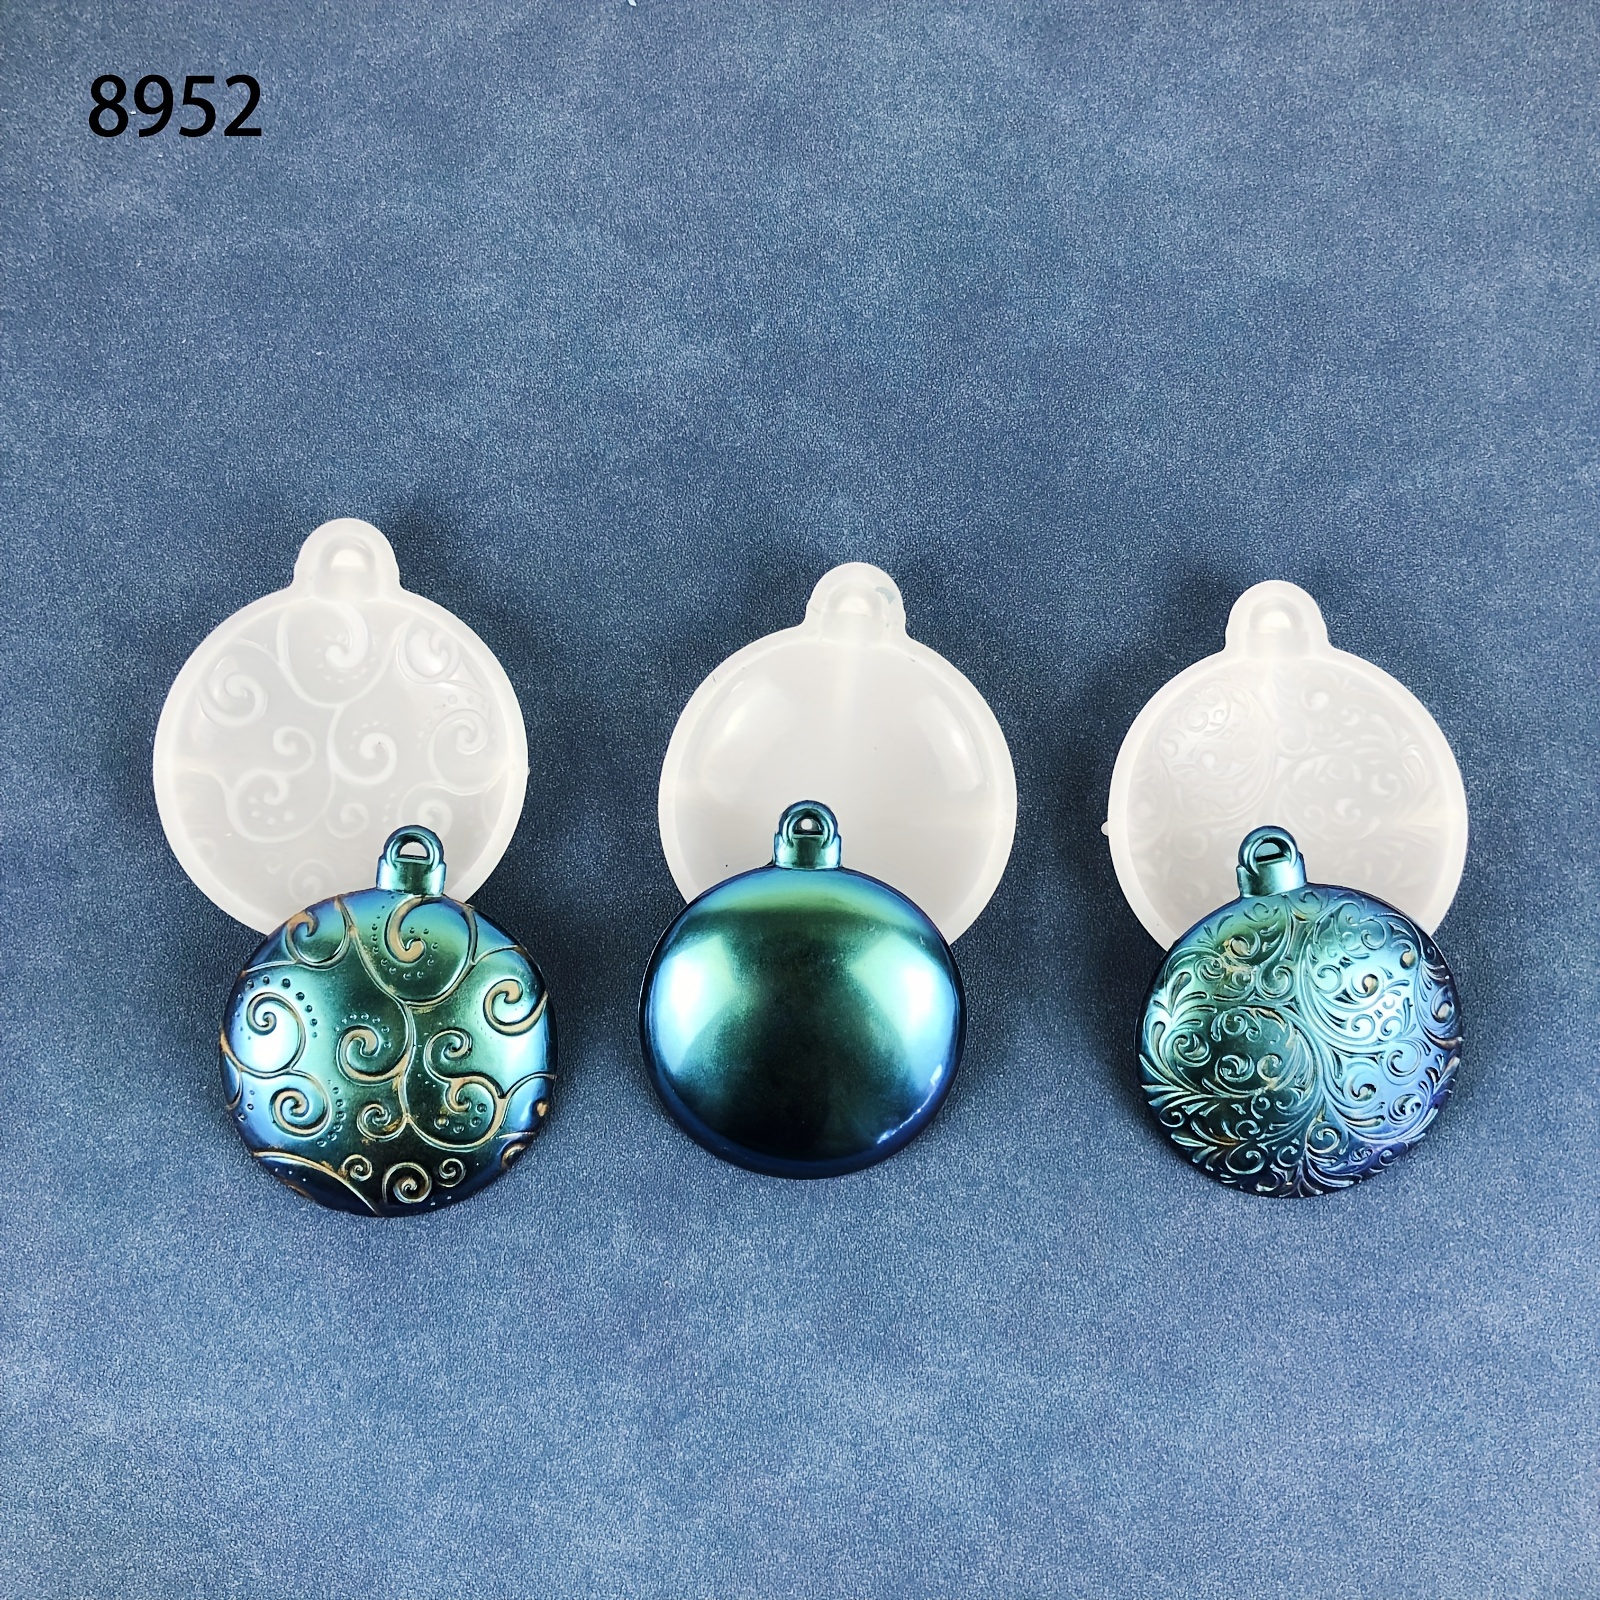 Jikolililili Christmas Ornaments Round Shape Pendant Molds for Epoxy Resin  Diy Crafts Jewelry Keychain Making Under $5 Clearance 